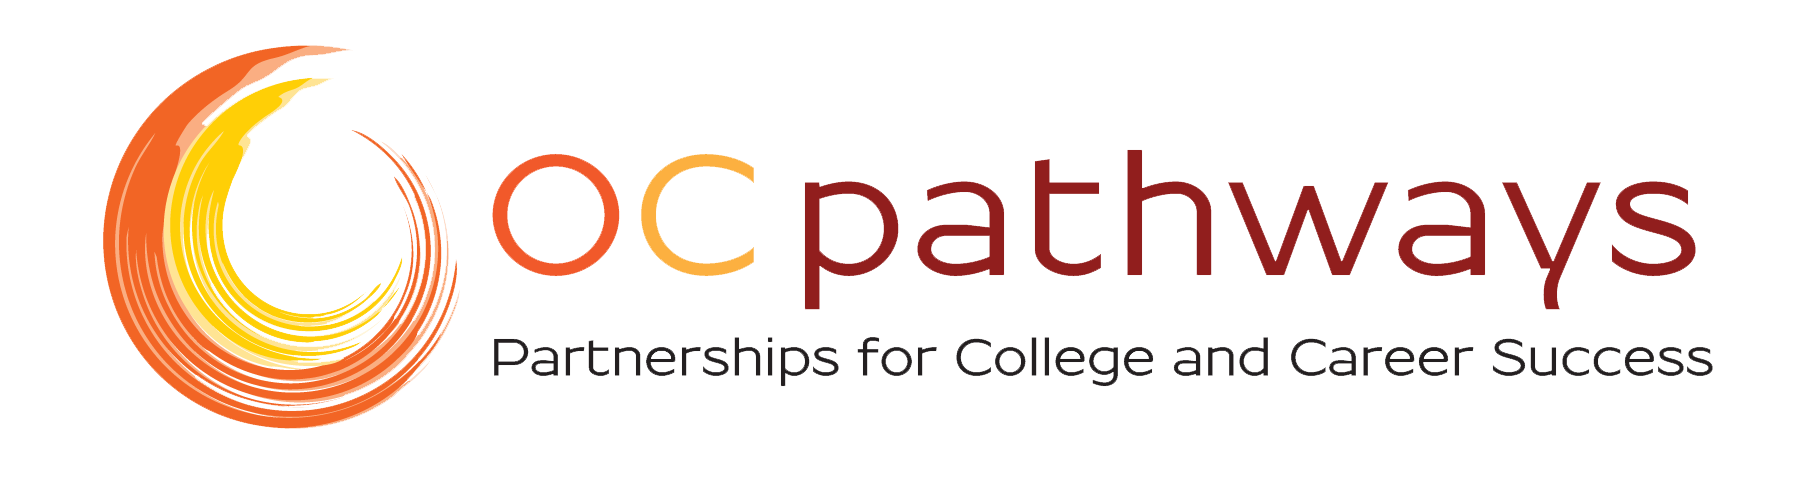 OC Pathways logo